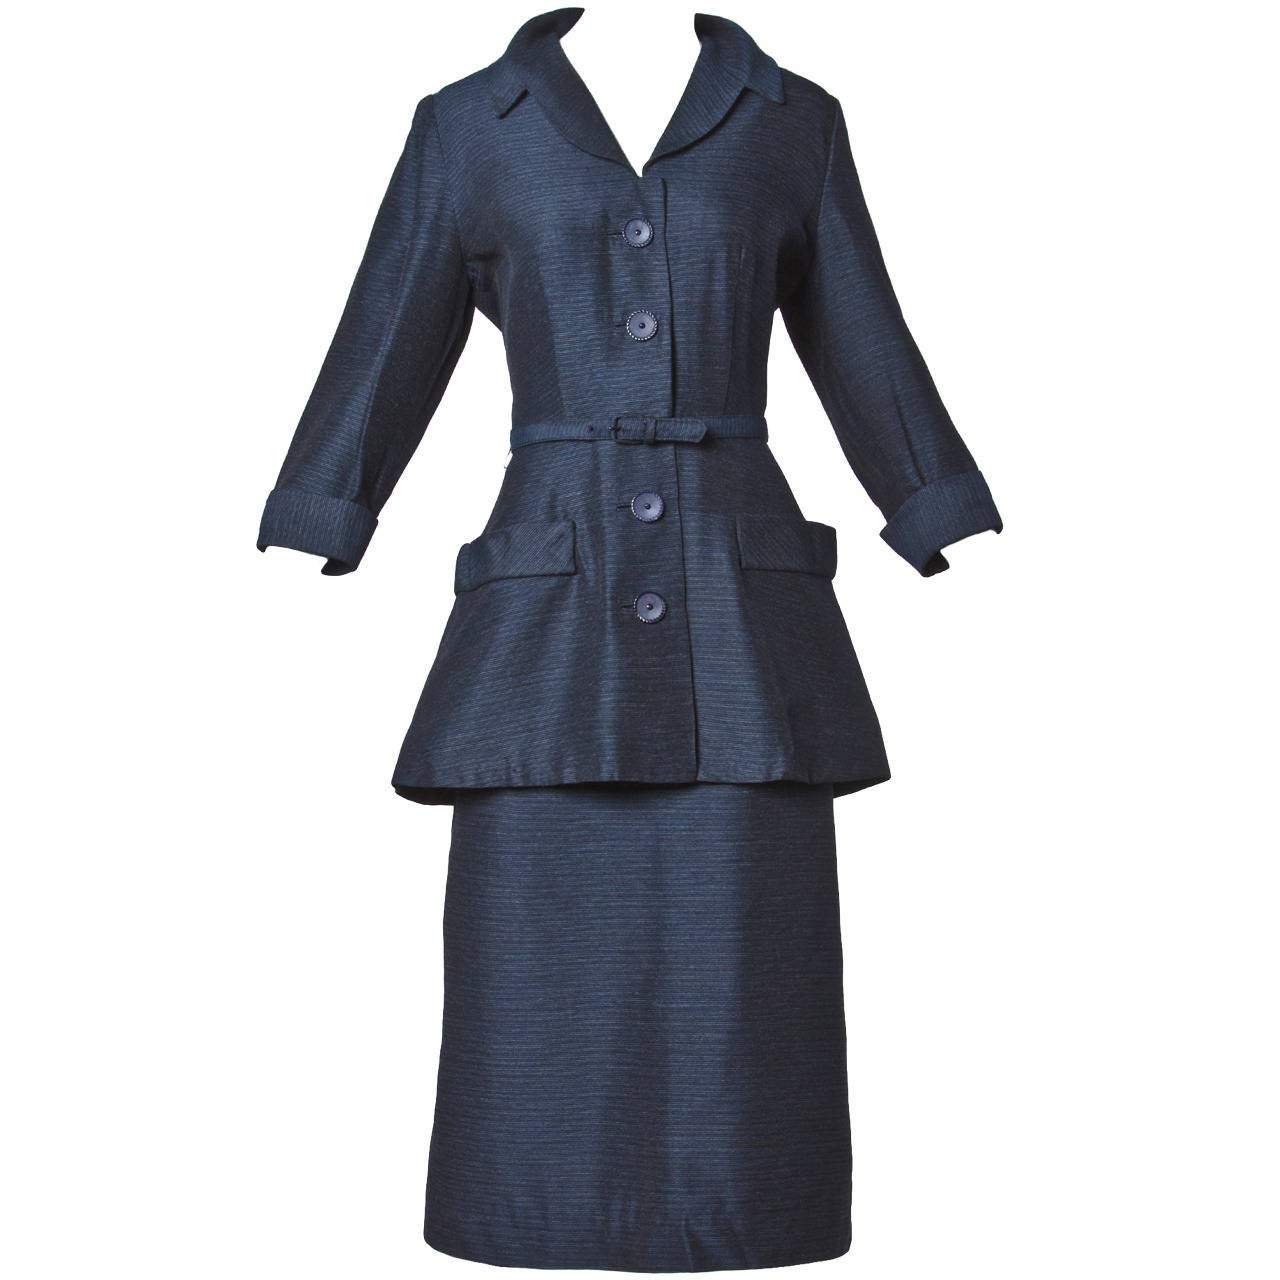 Vintage 1950s 50s Navy Wool & Silk Skirt Suit 3-Piece Ensemble